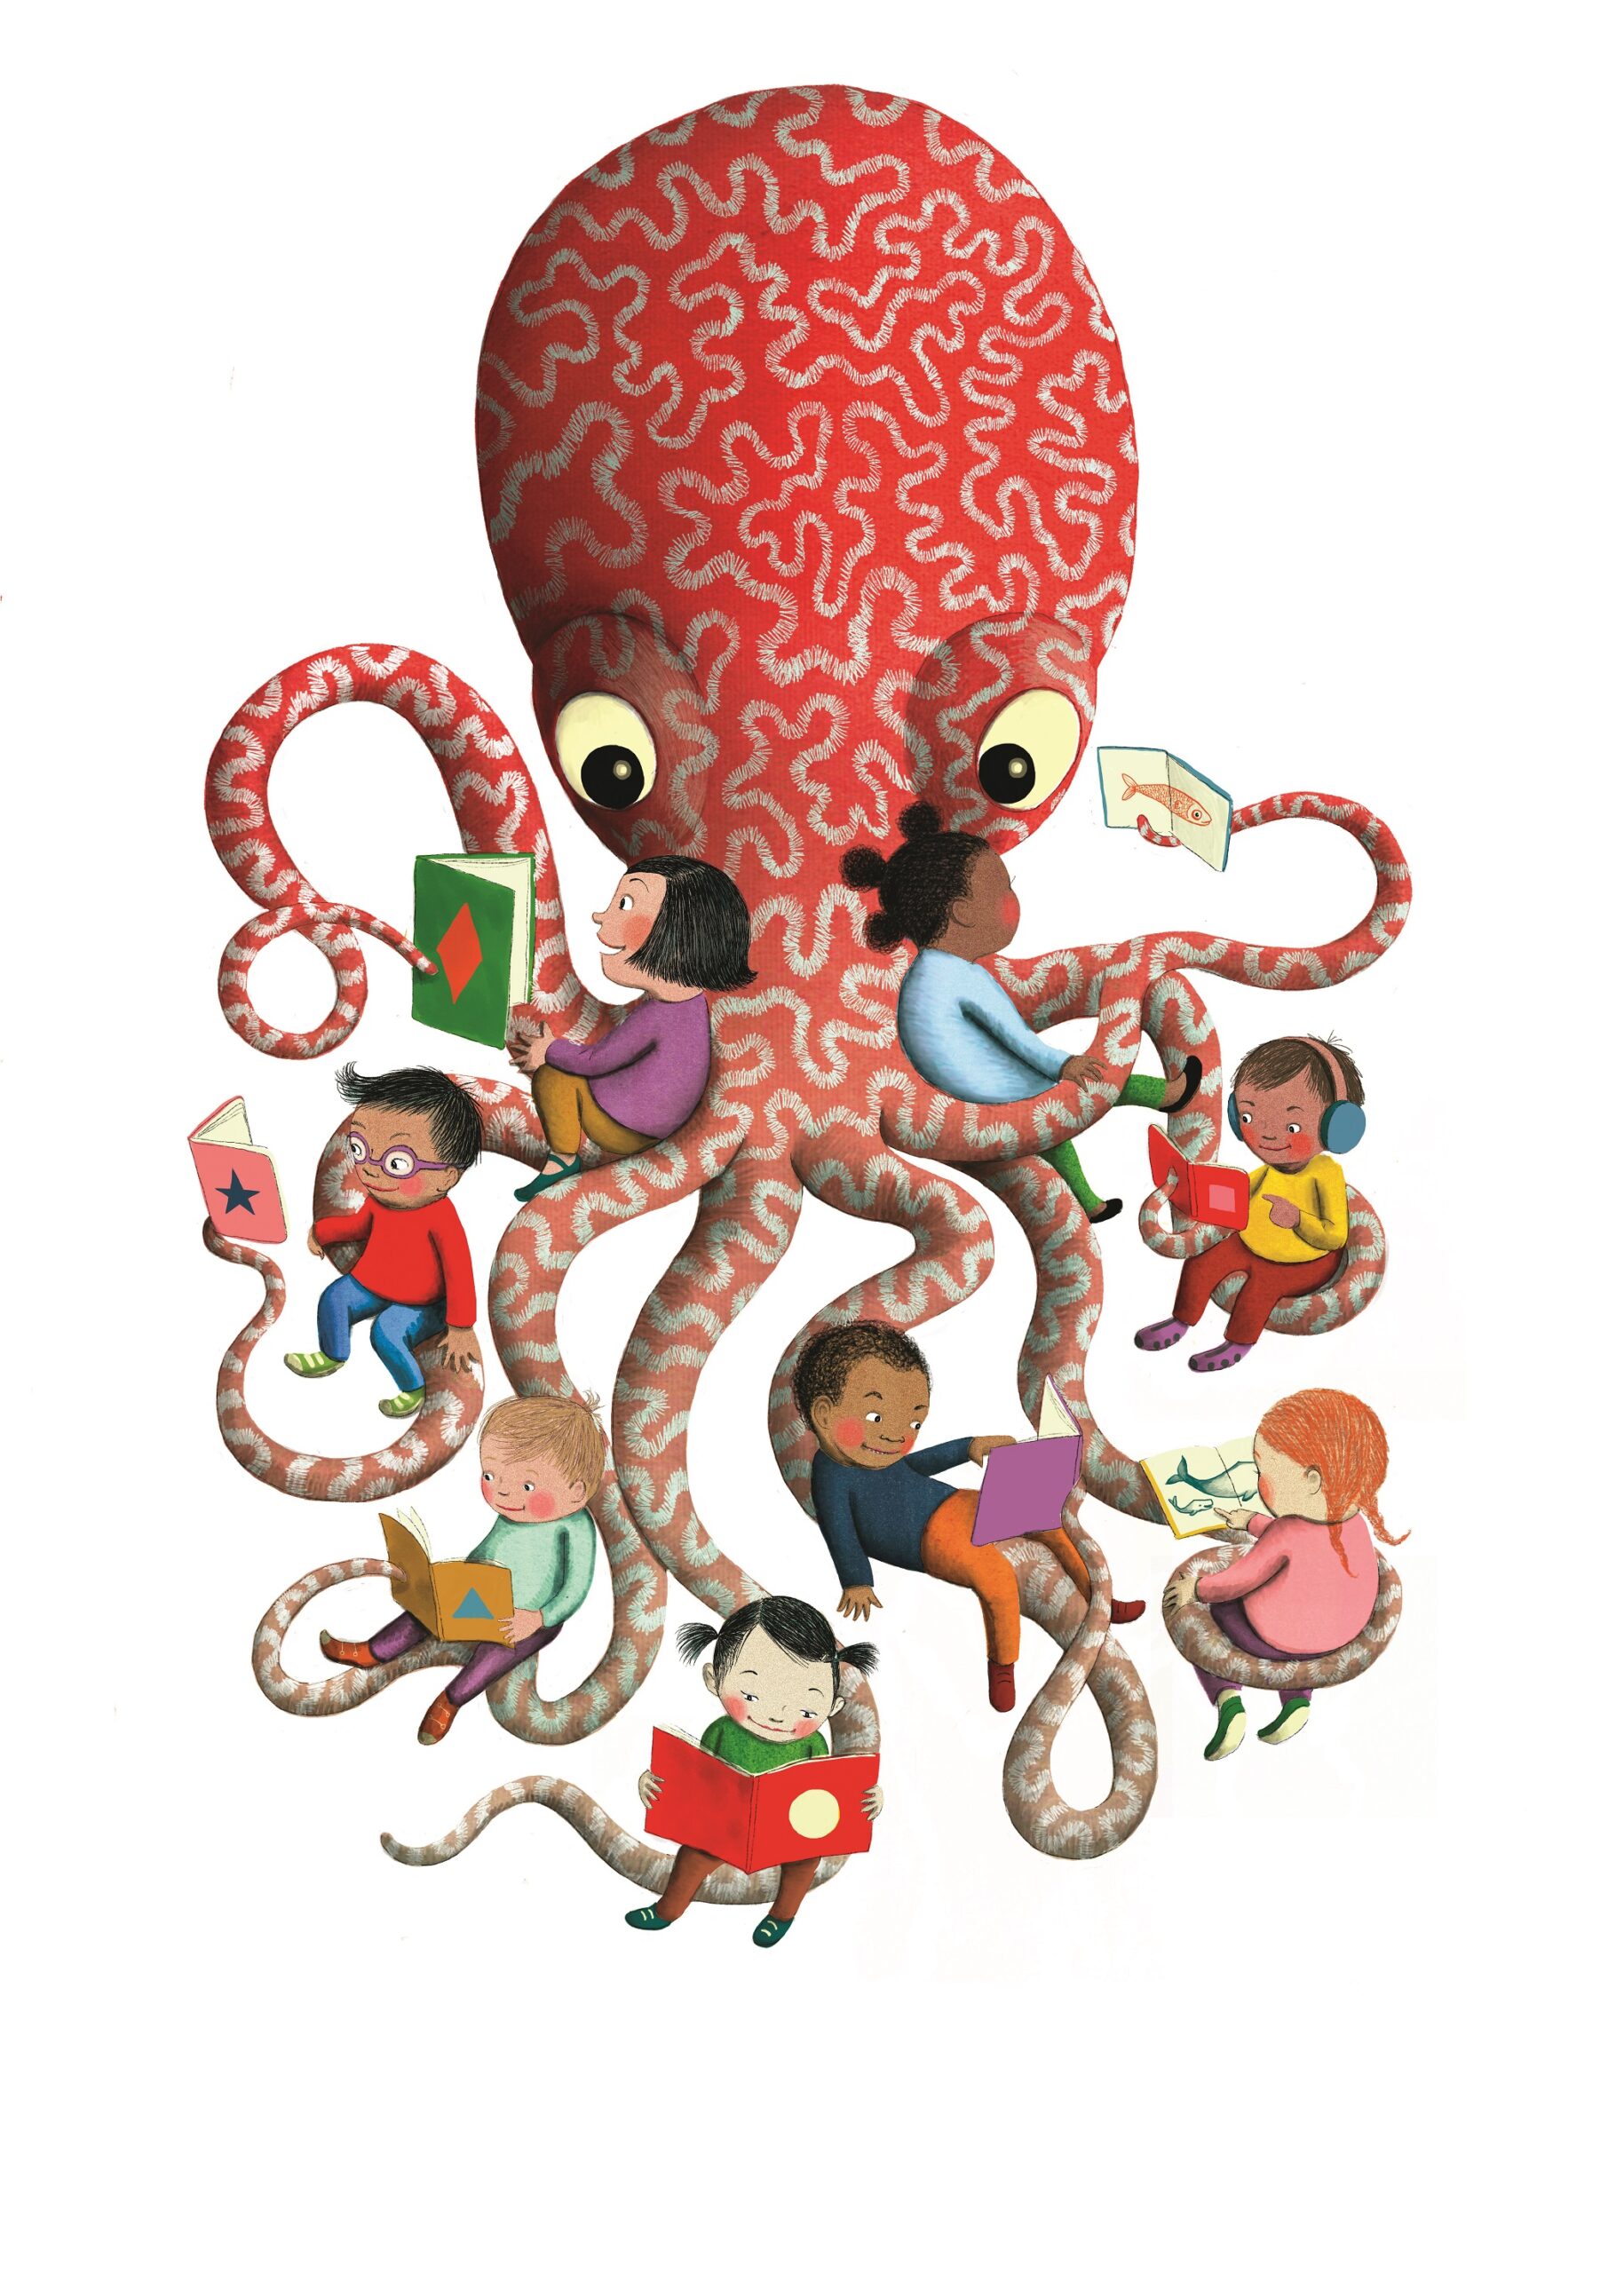 gentle octopus holds many children reading books